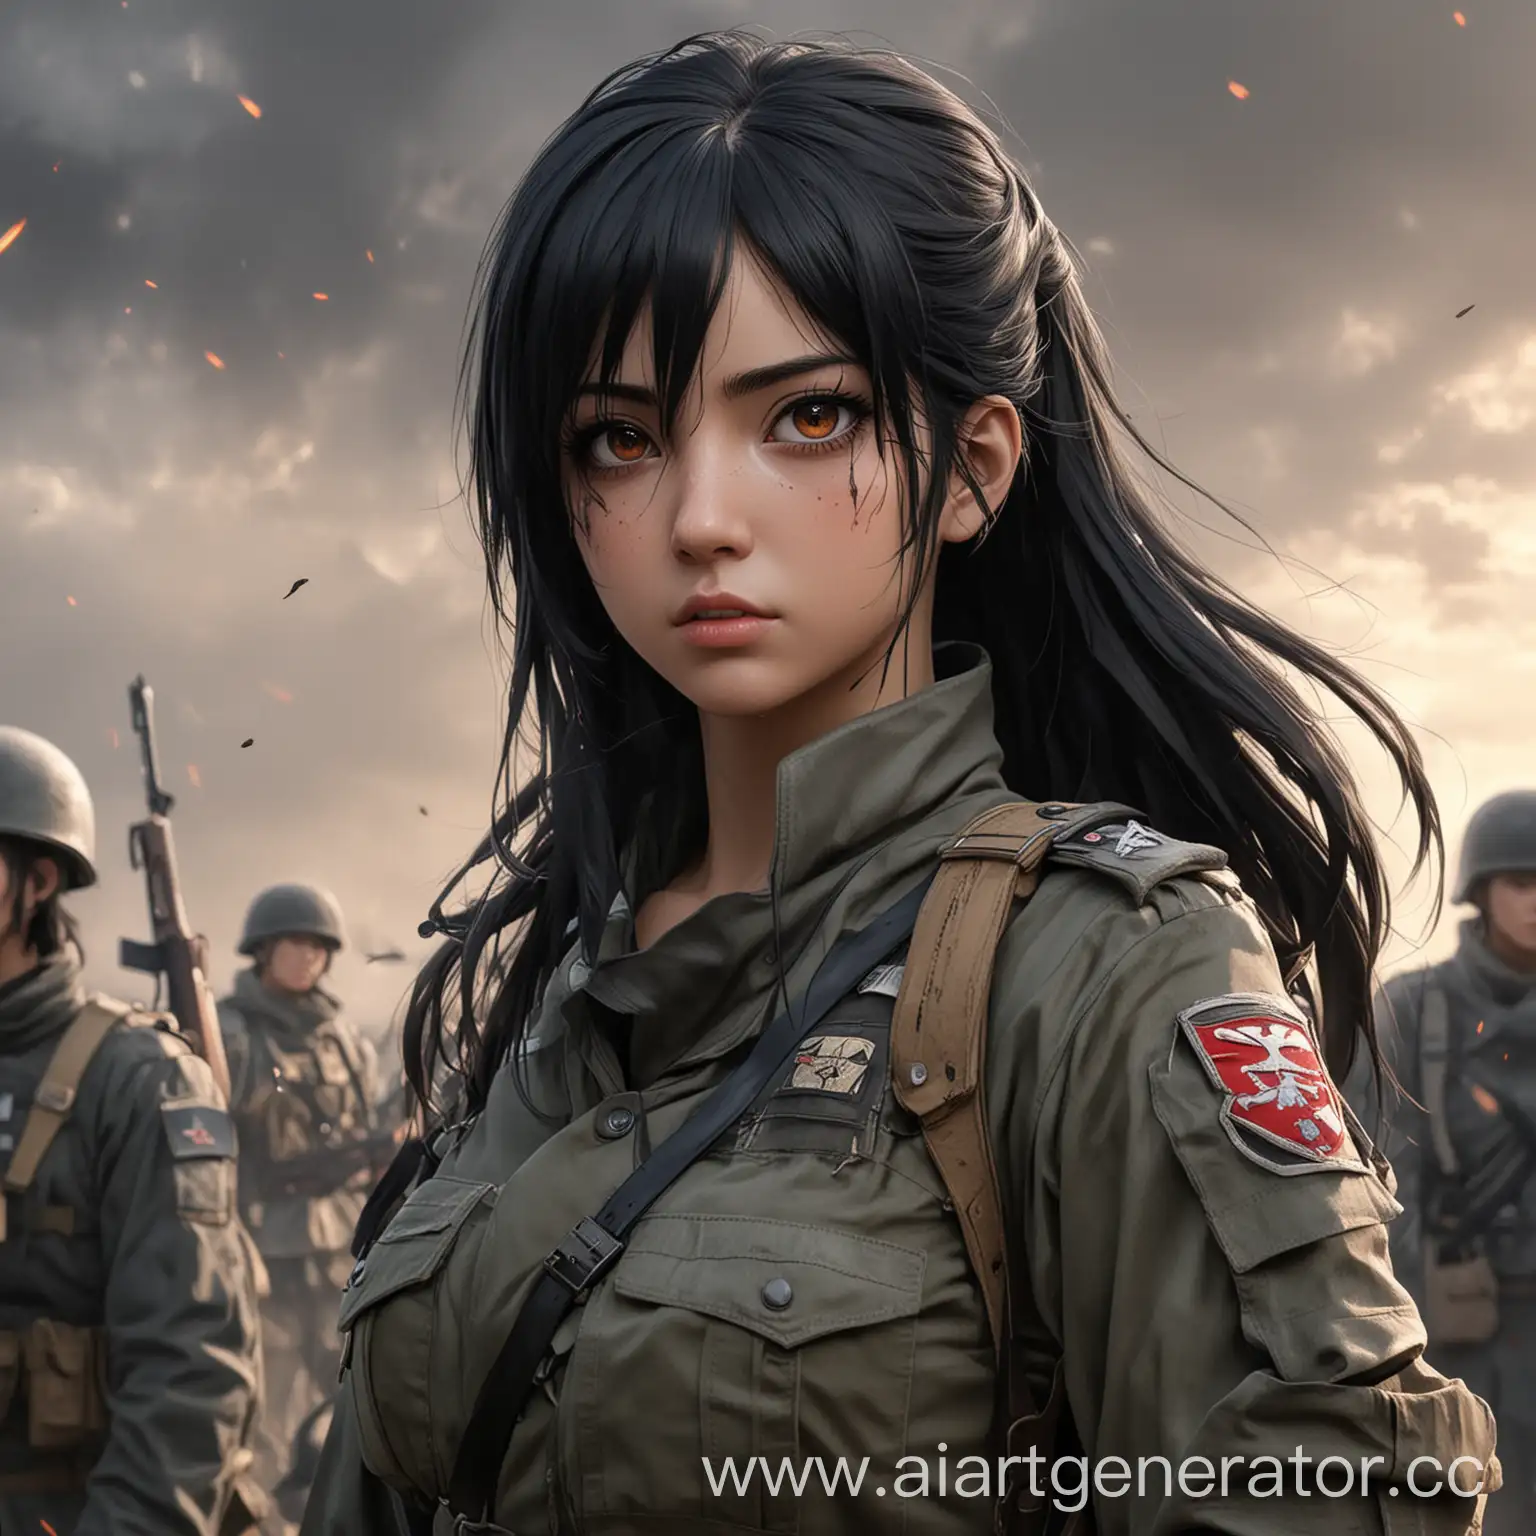 Emotional-Anime-Soldier-Girl-Observing-Battlefield-Scene-with-Tear